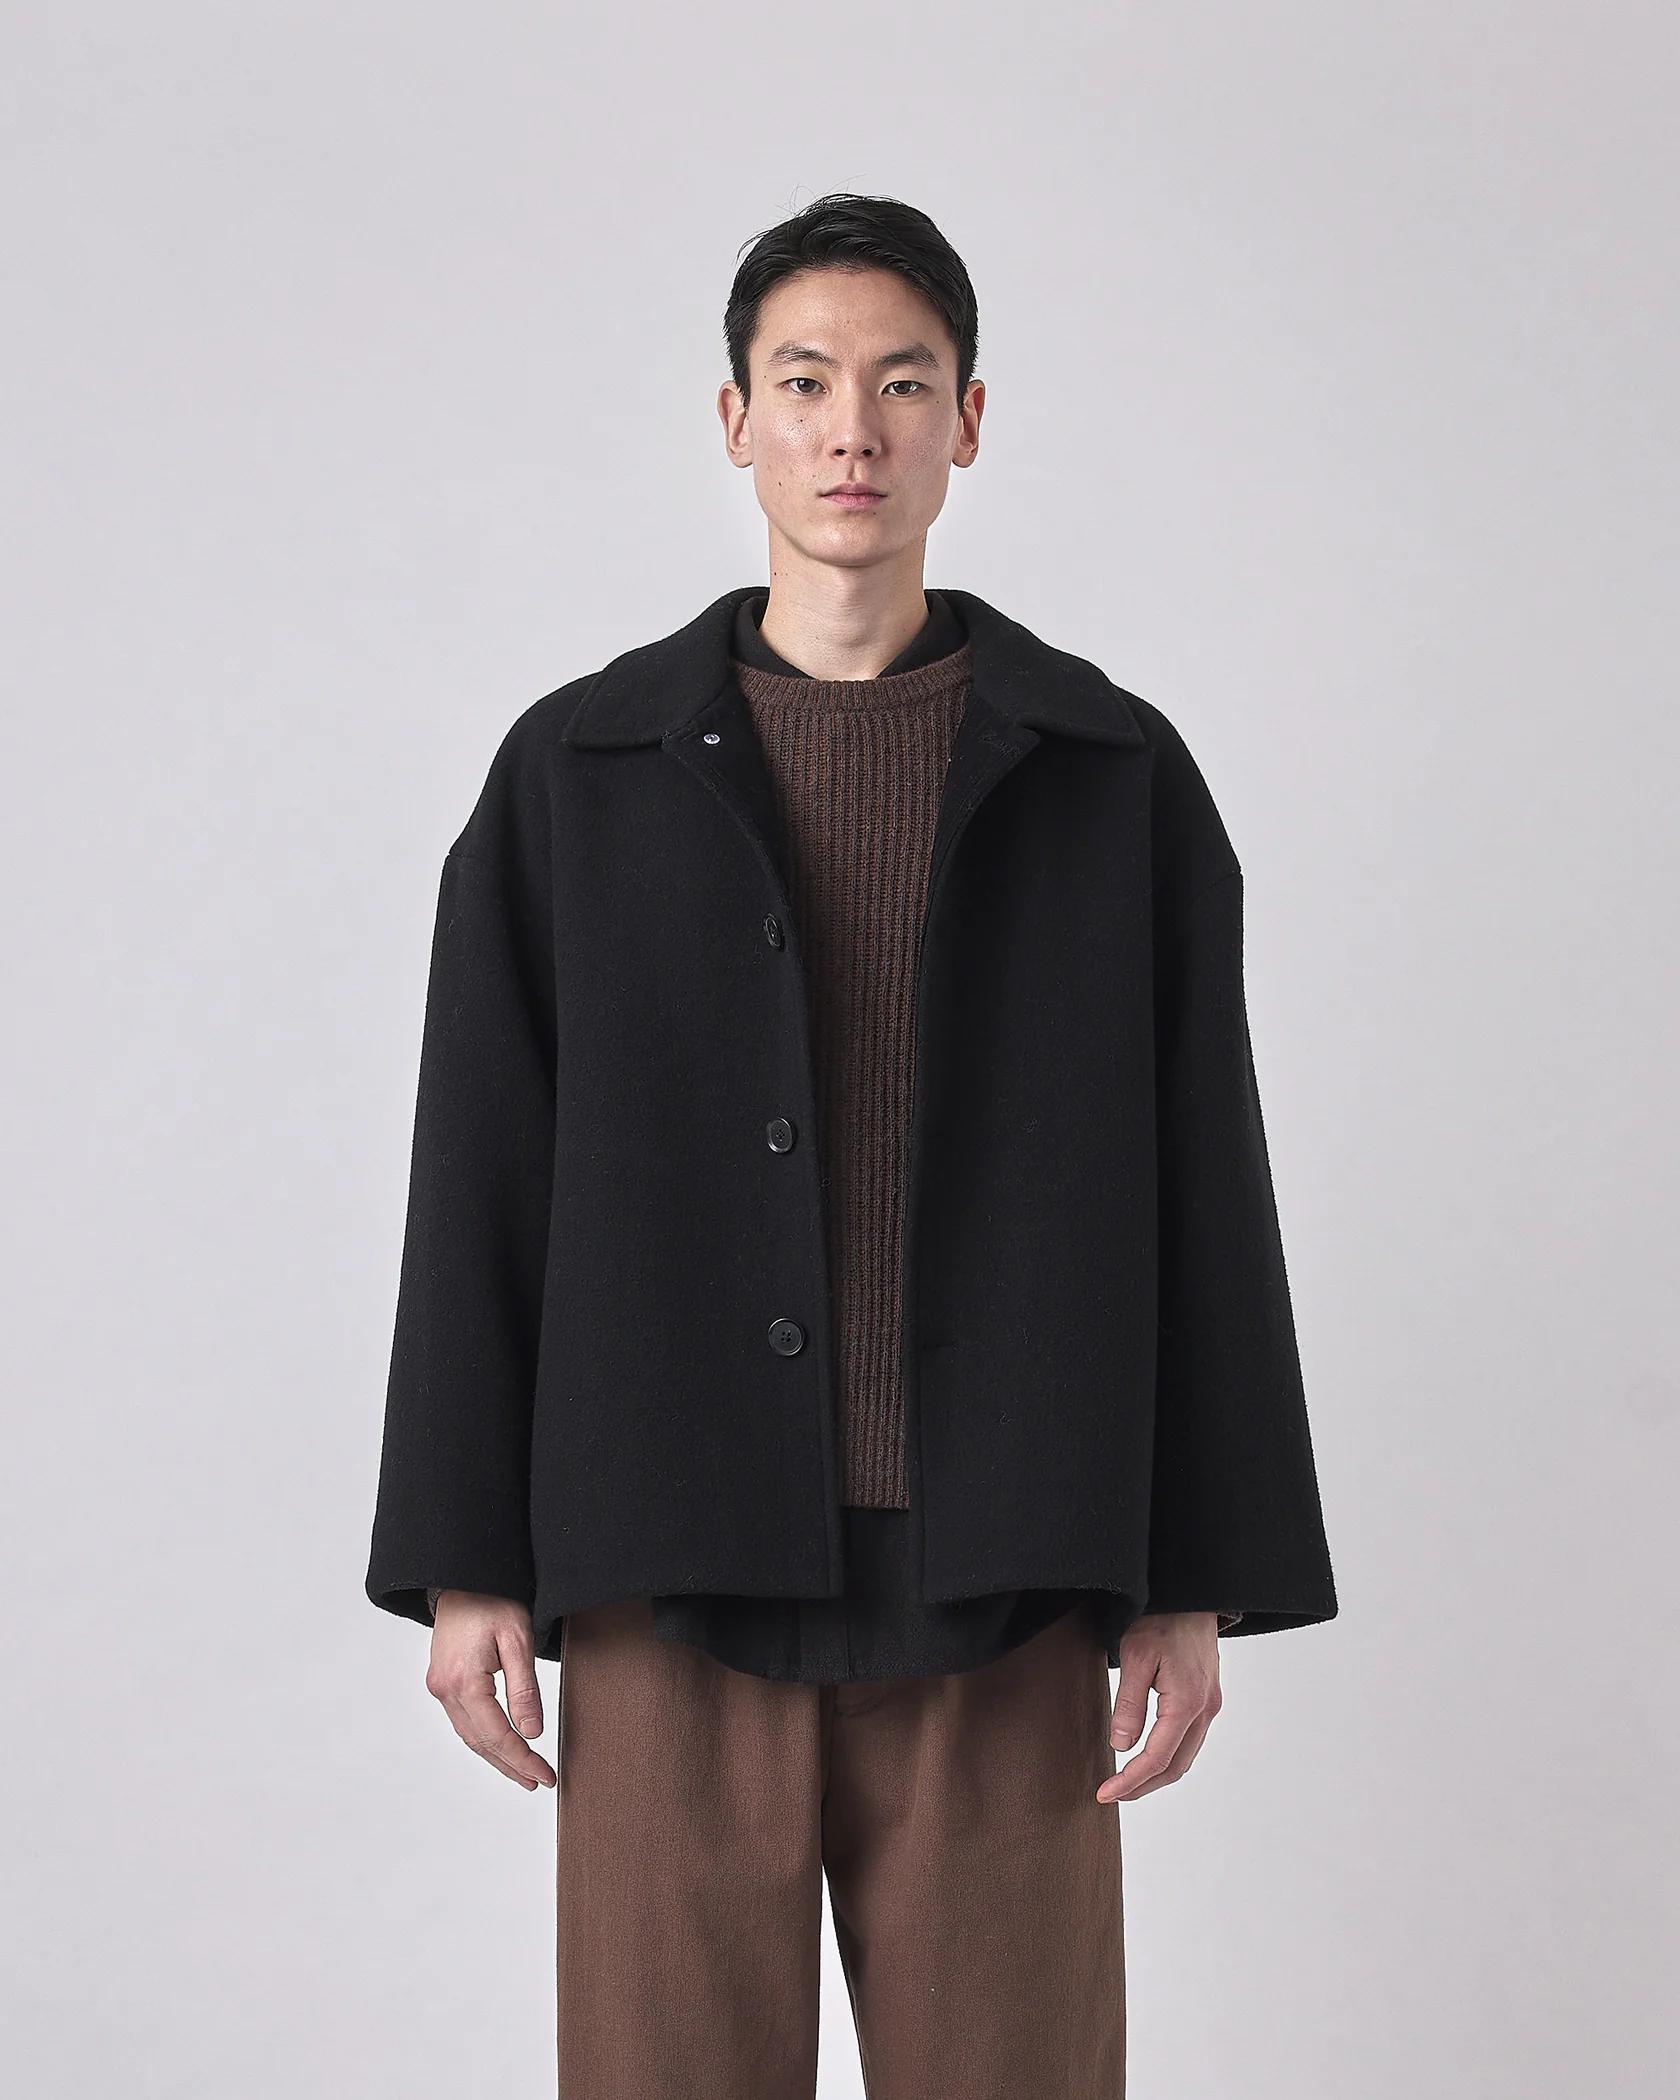 Product Image for Short Wool Coat, Black